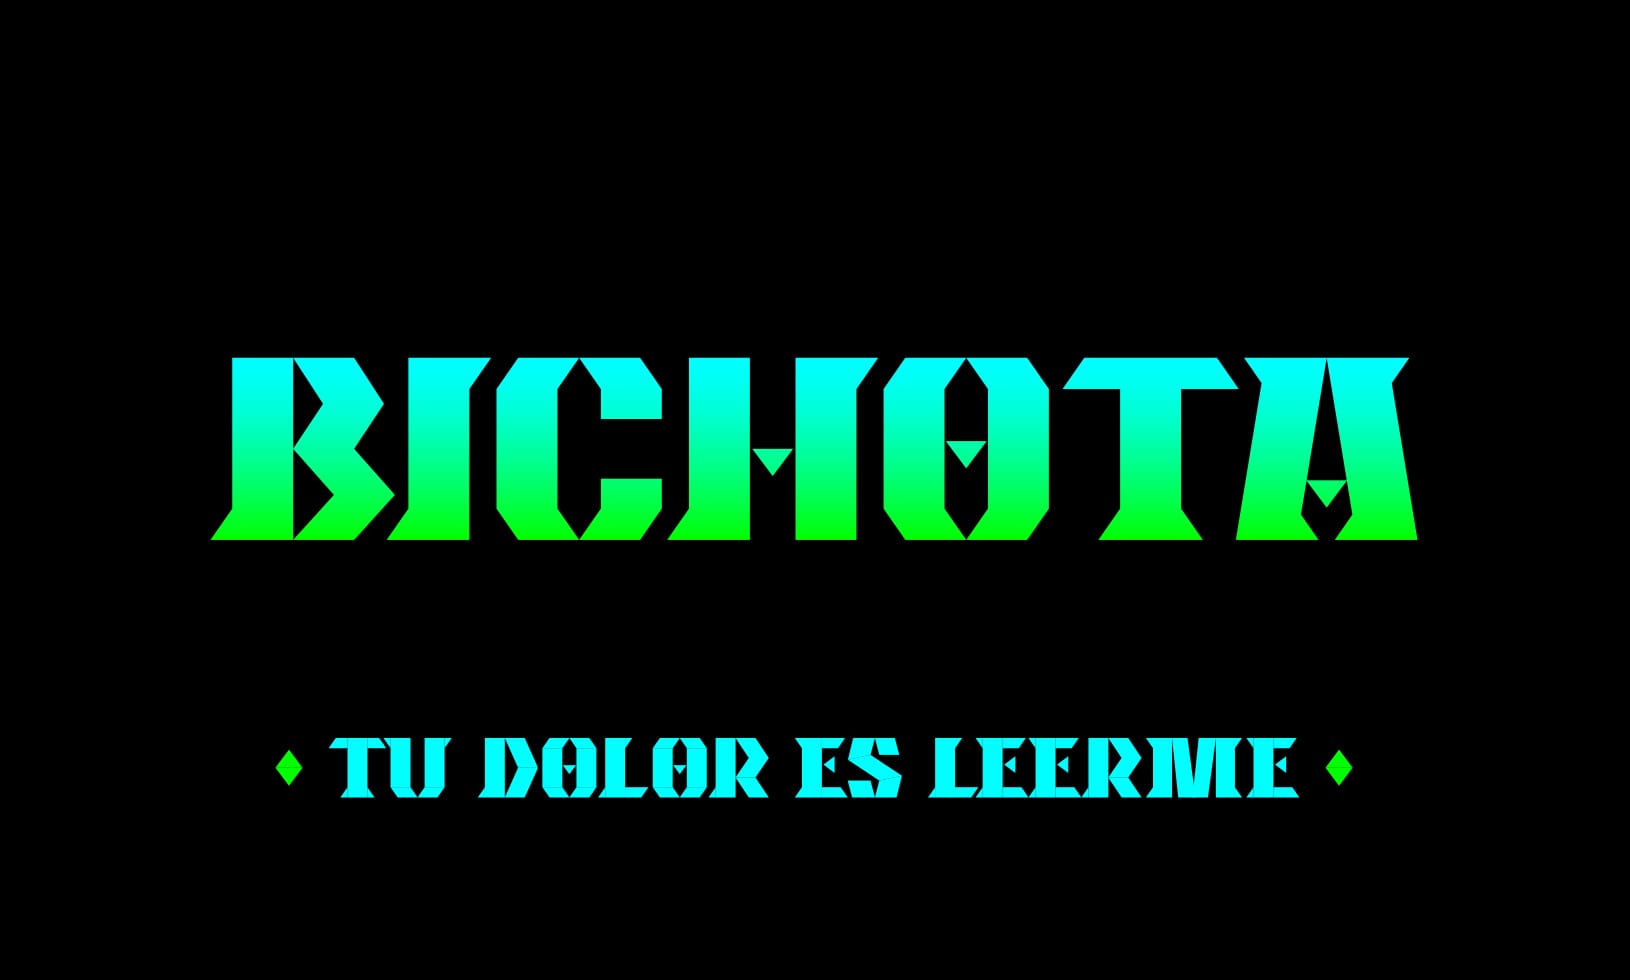 Bichota1_Lonnie Ruiz